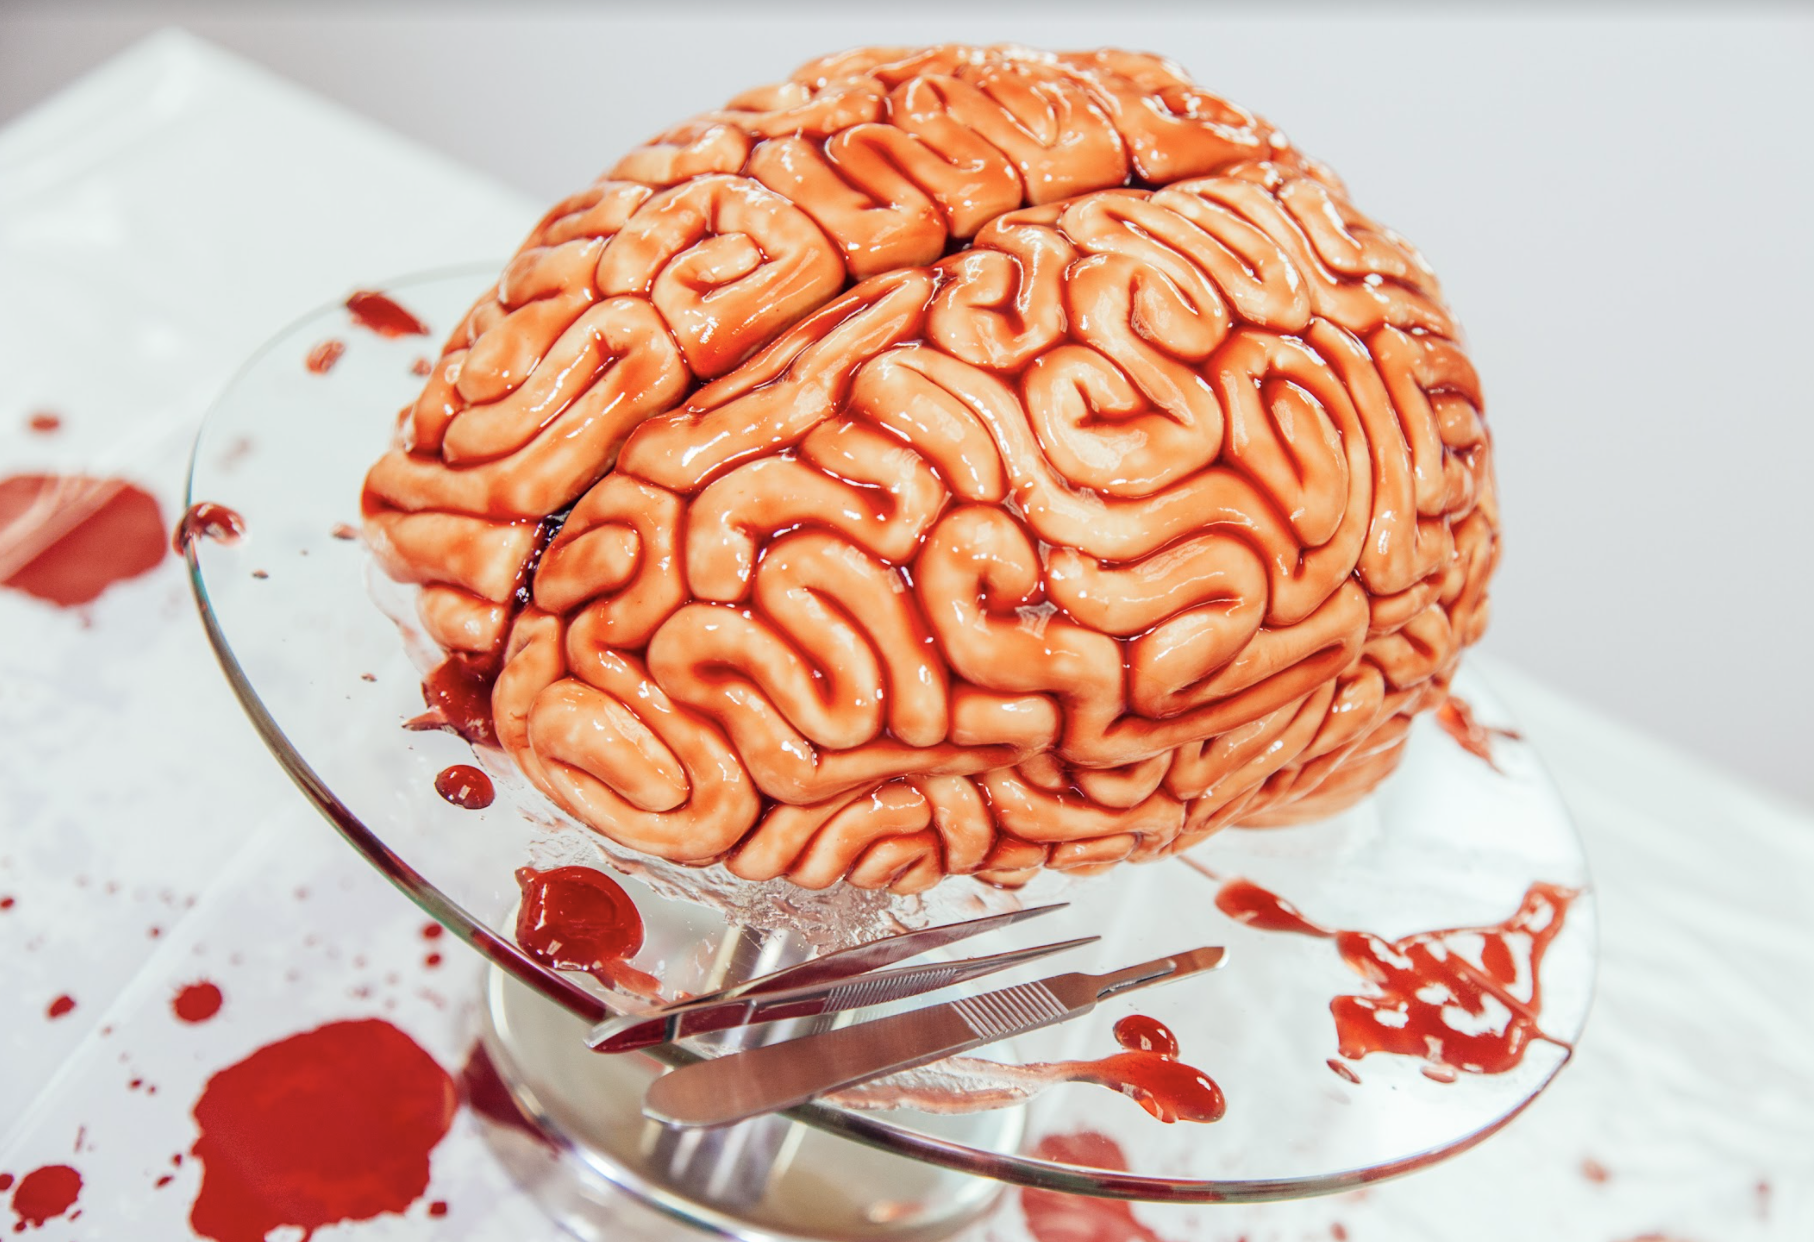 Here's A Realistic Brain Cake To Help You Feel Like A Zombie | Foodiggity